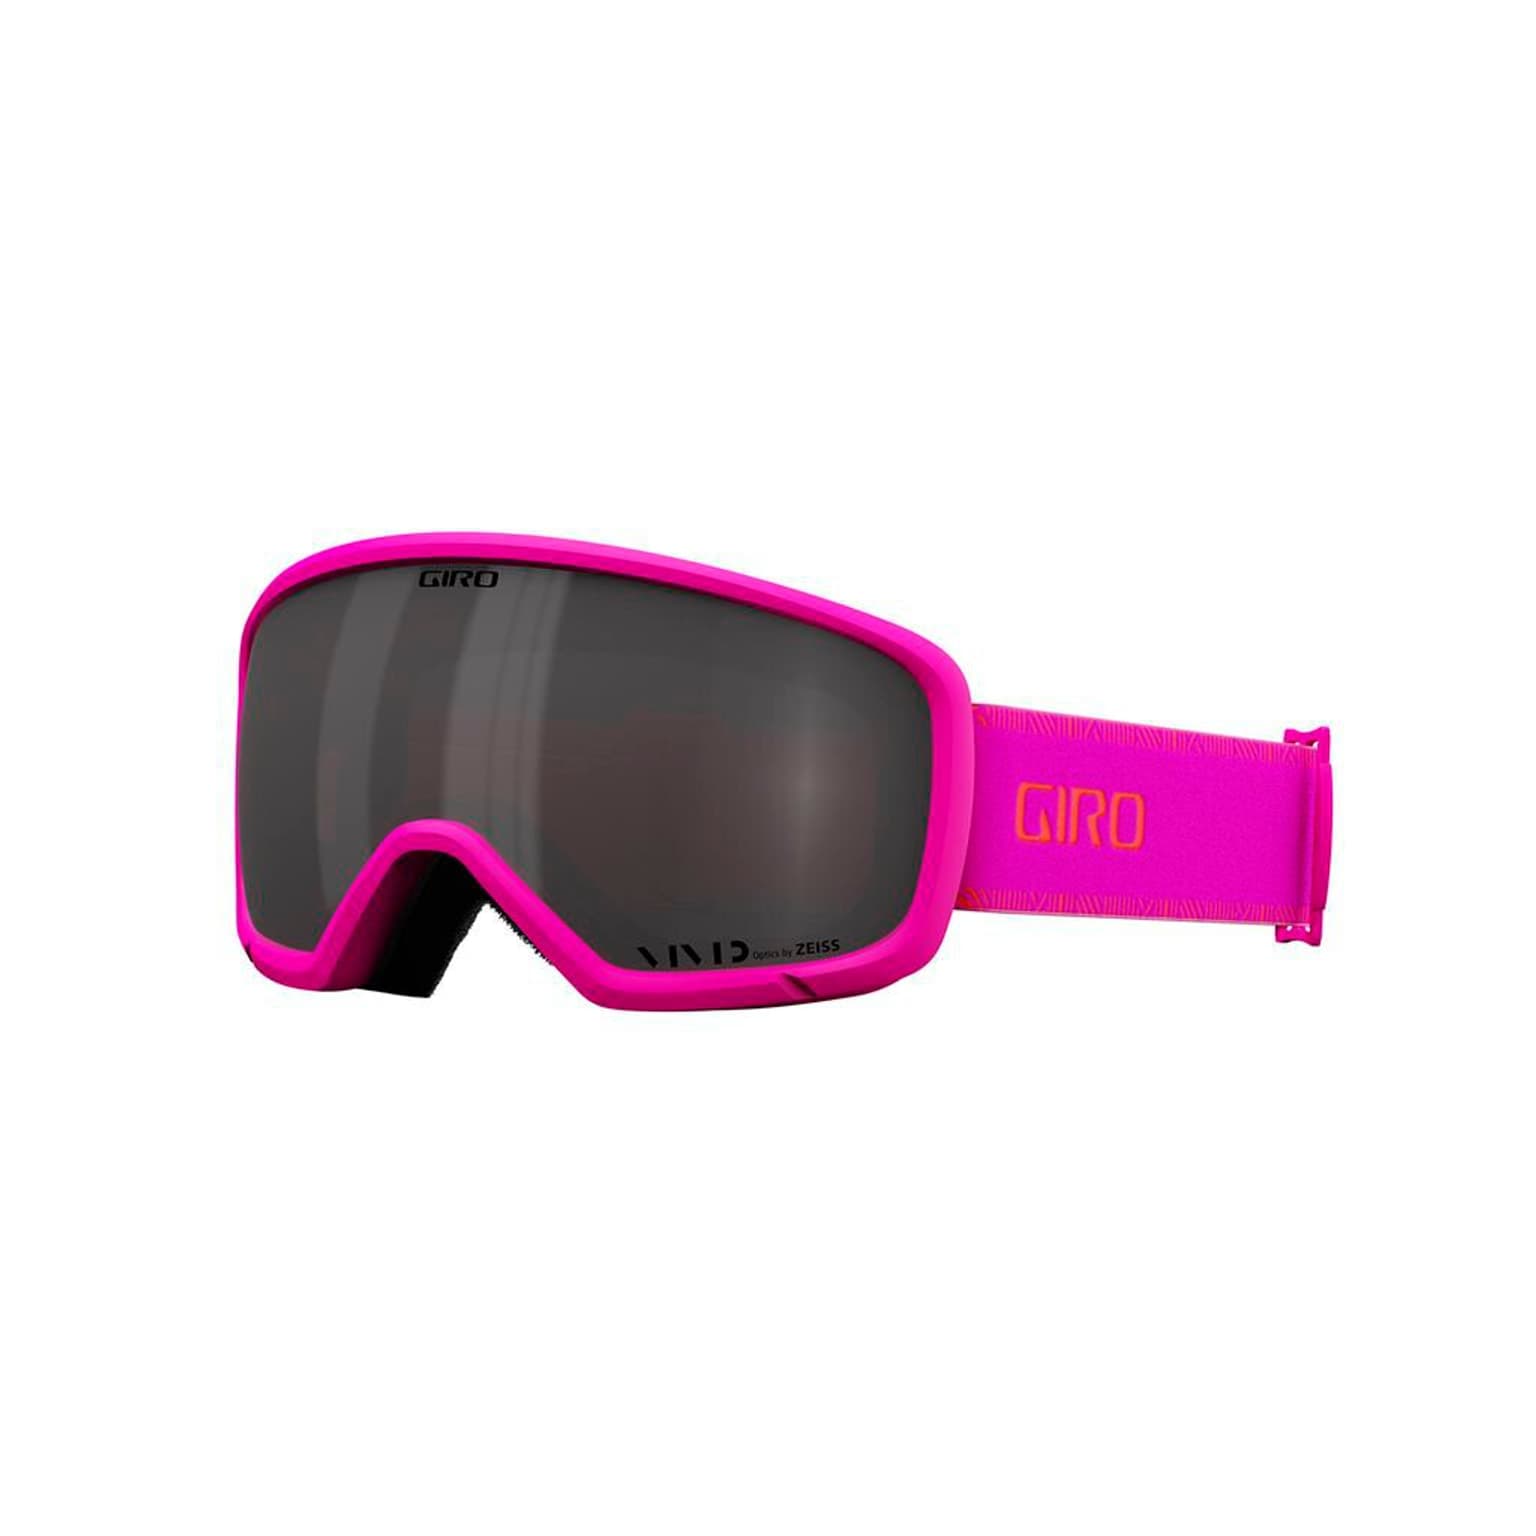 Giro Giro Millie Vivid Goggle Masque de ski magenta 1